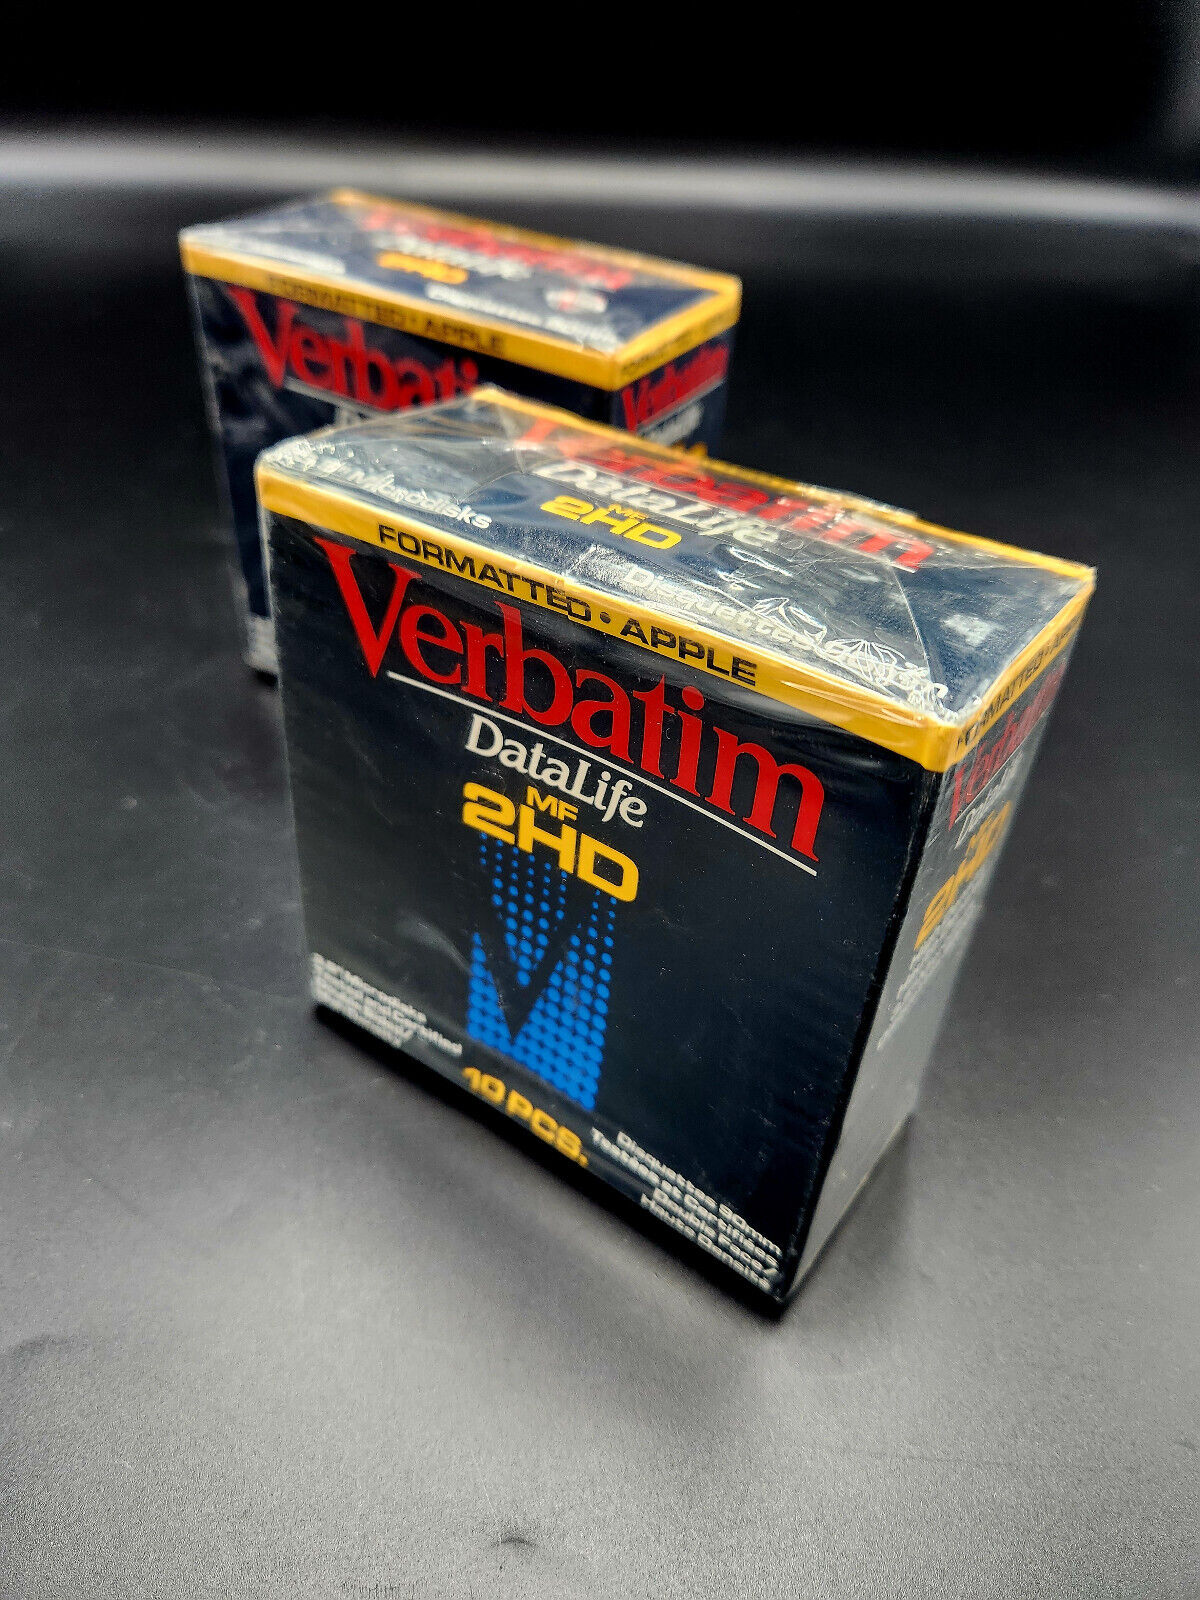 Verbatim DataLife MF 2HD Micro 3.5 Diskettes Floppy Discs 2 - 10 Pack New Sealed